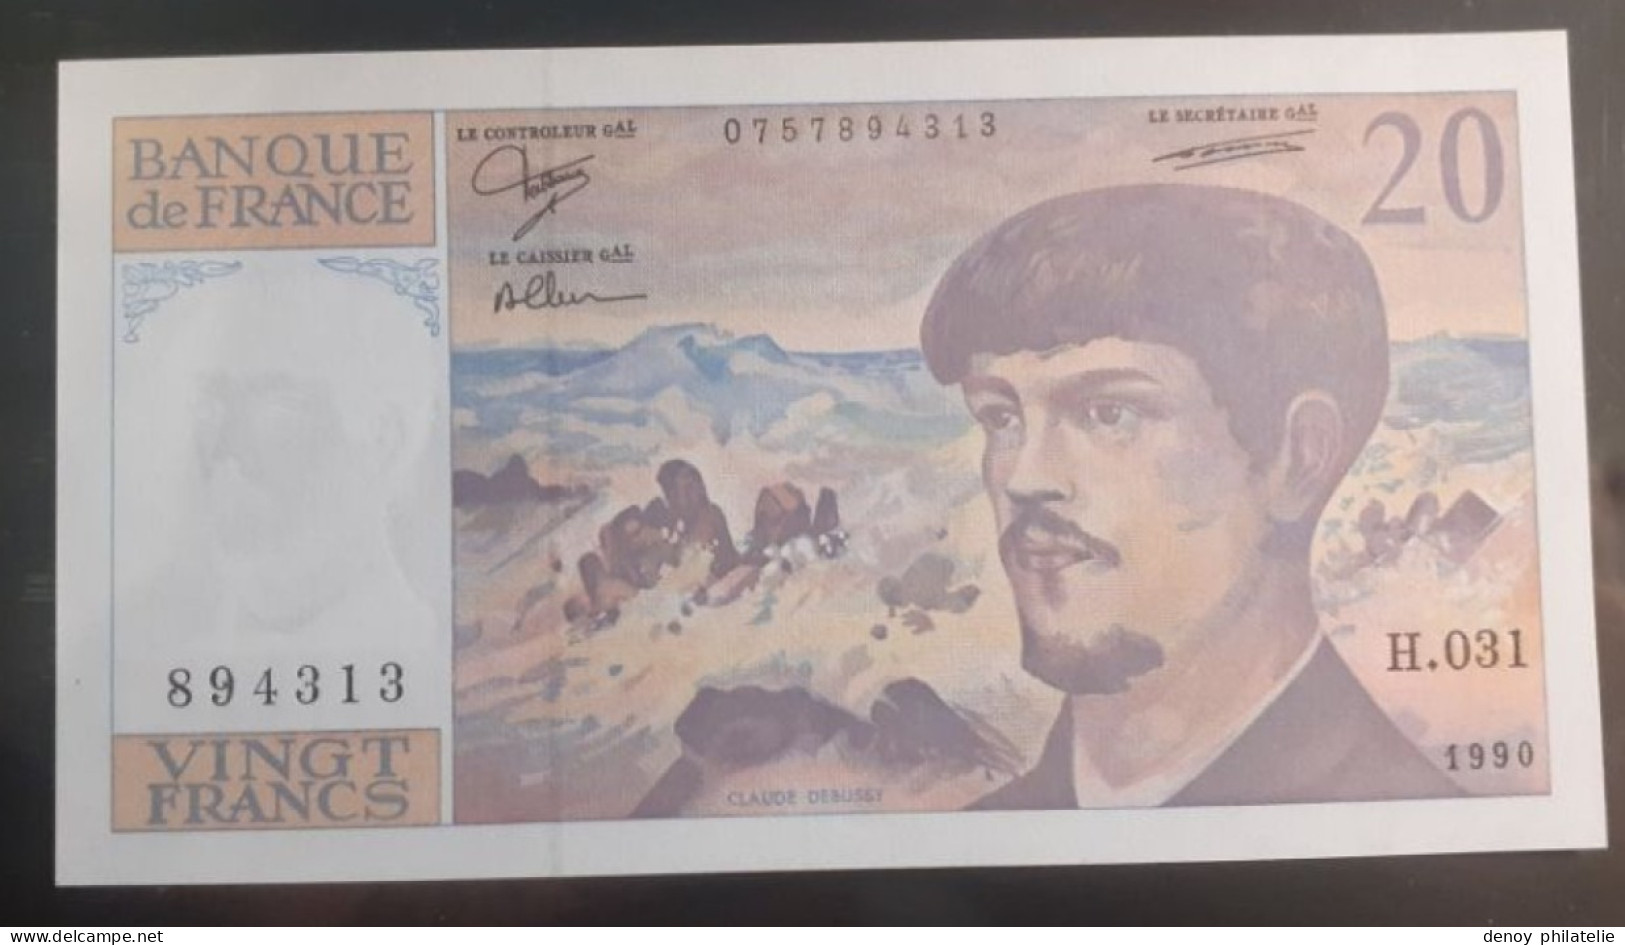 Billet de 20 francs Debussy 1990 alphabet H 31 reference Fayet 66bis 01 31 serie de 3 billets neuf se suivant